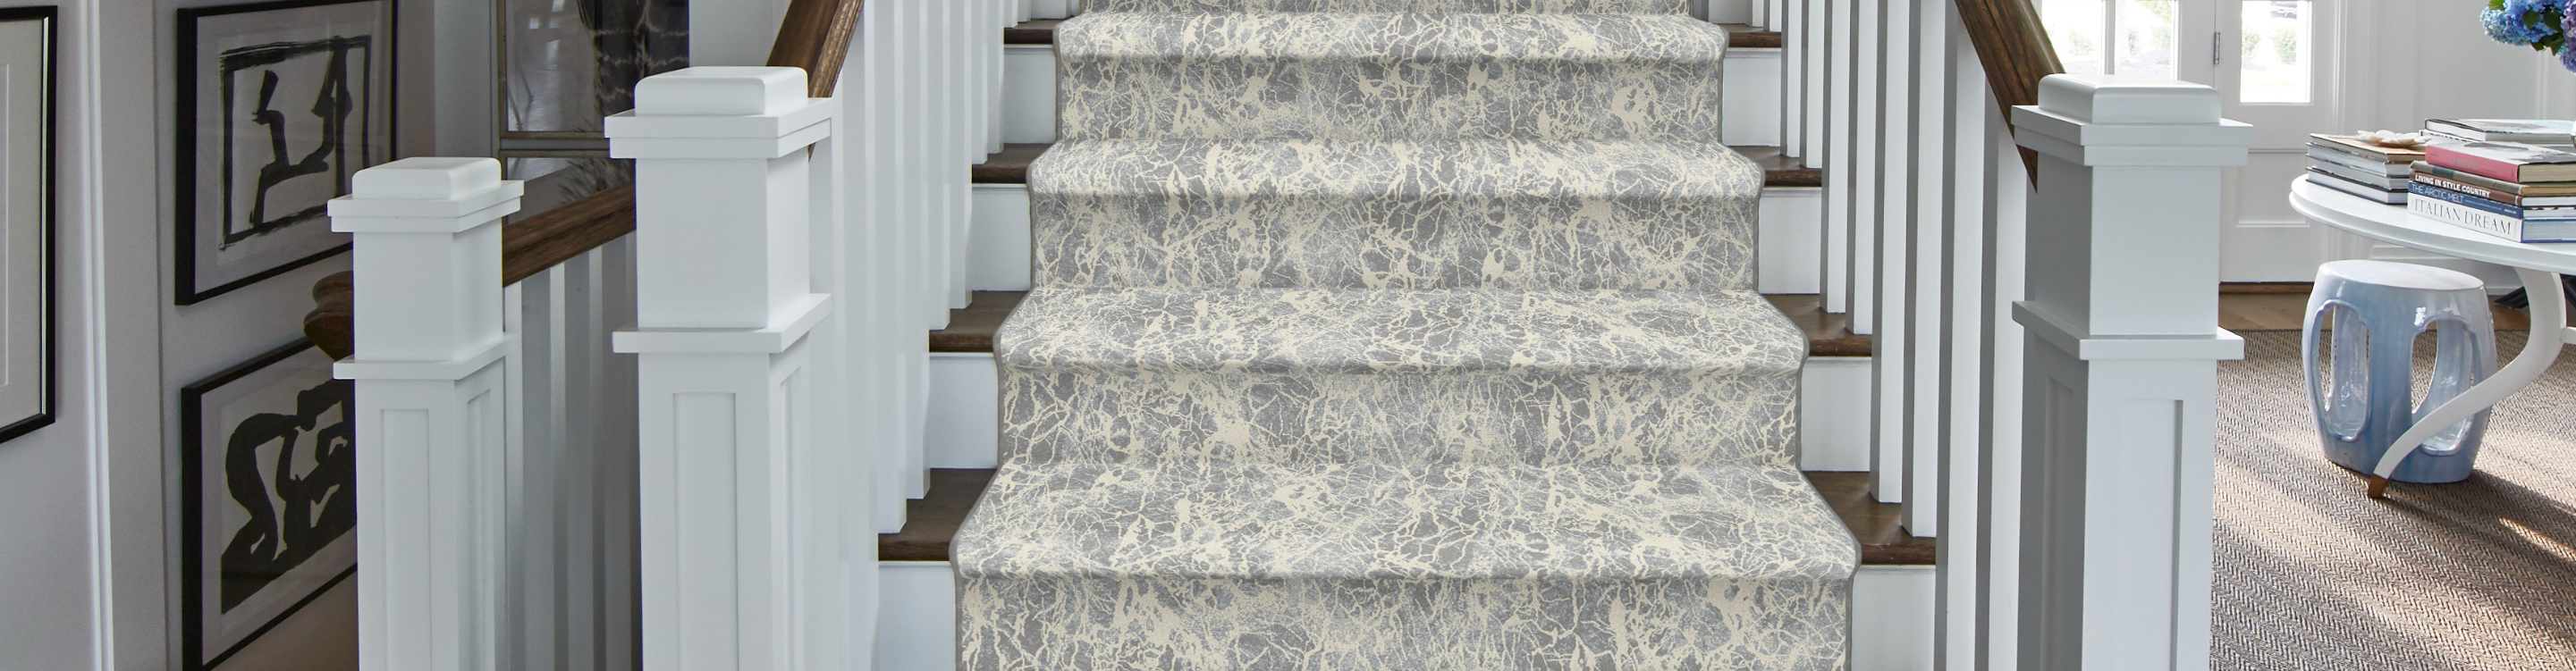 Stair Runner Patterned Grey Carpet